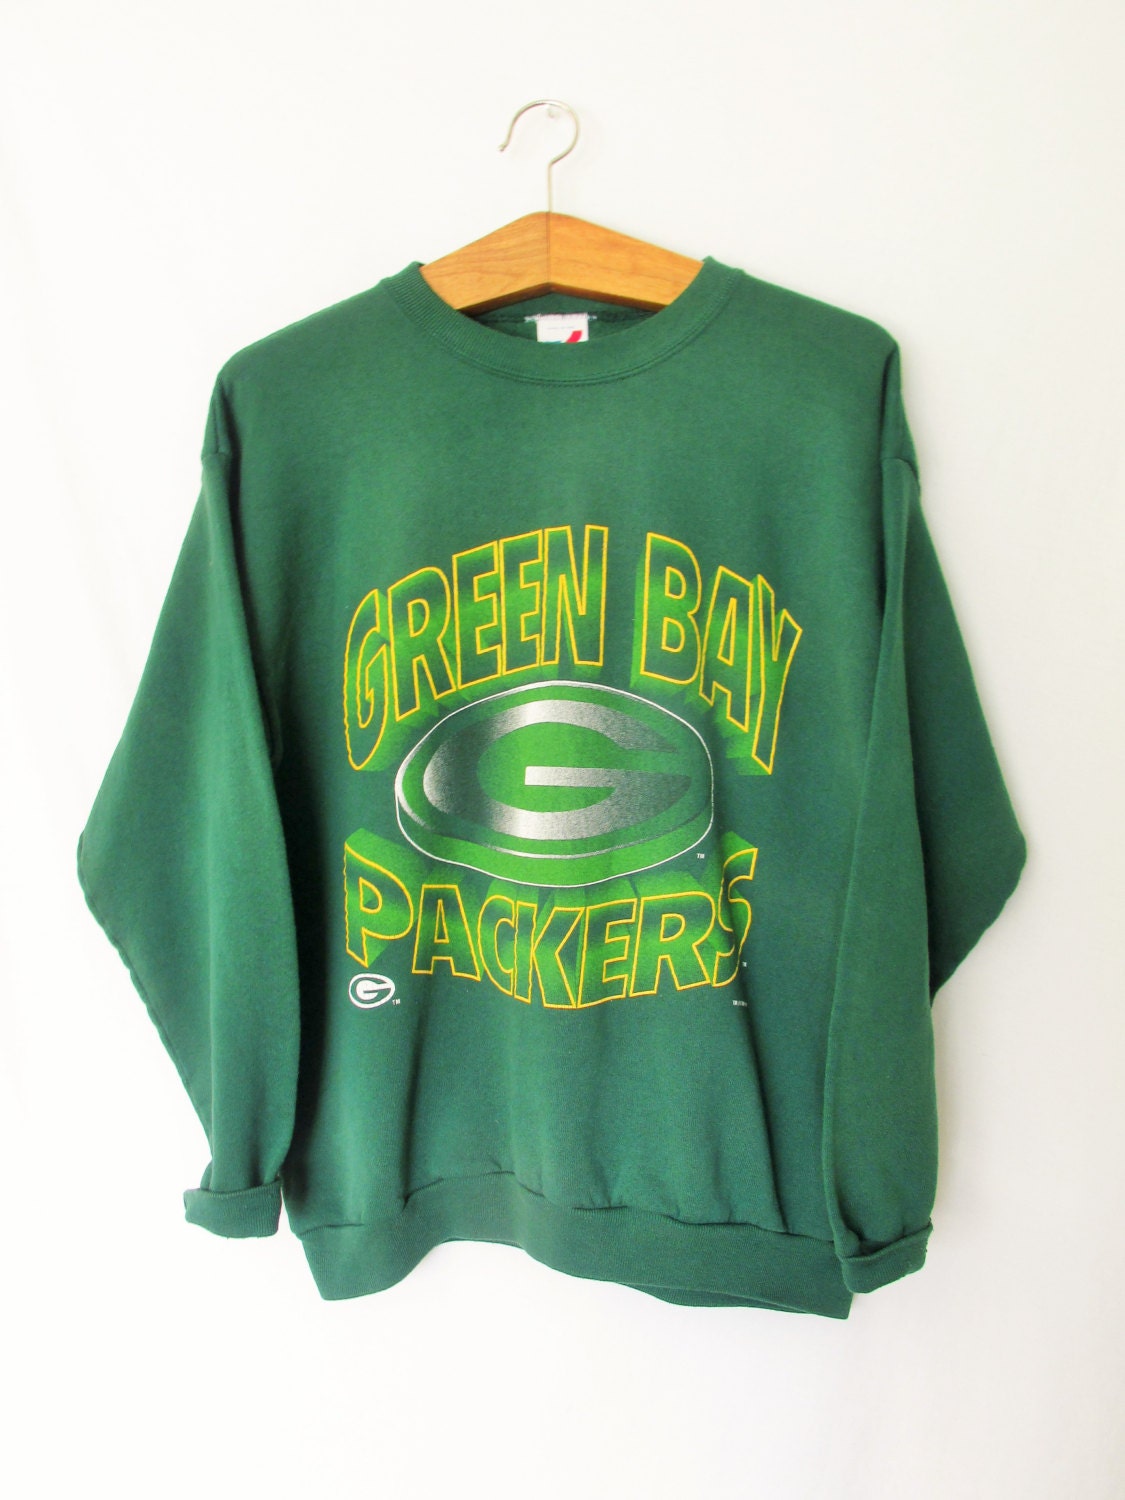 Vintage 1990's Retro Green Bay Packers Football Sweatshirt